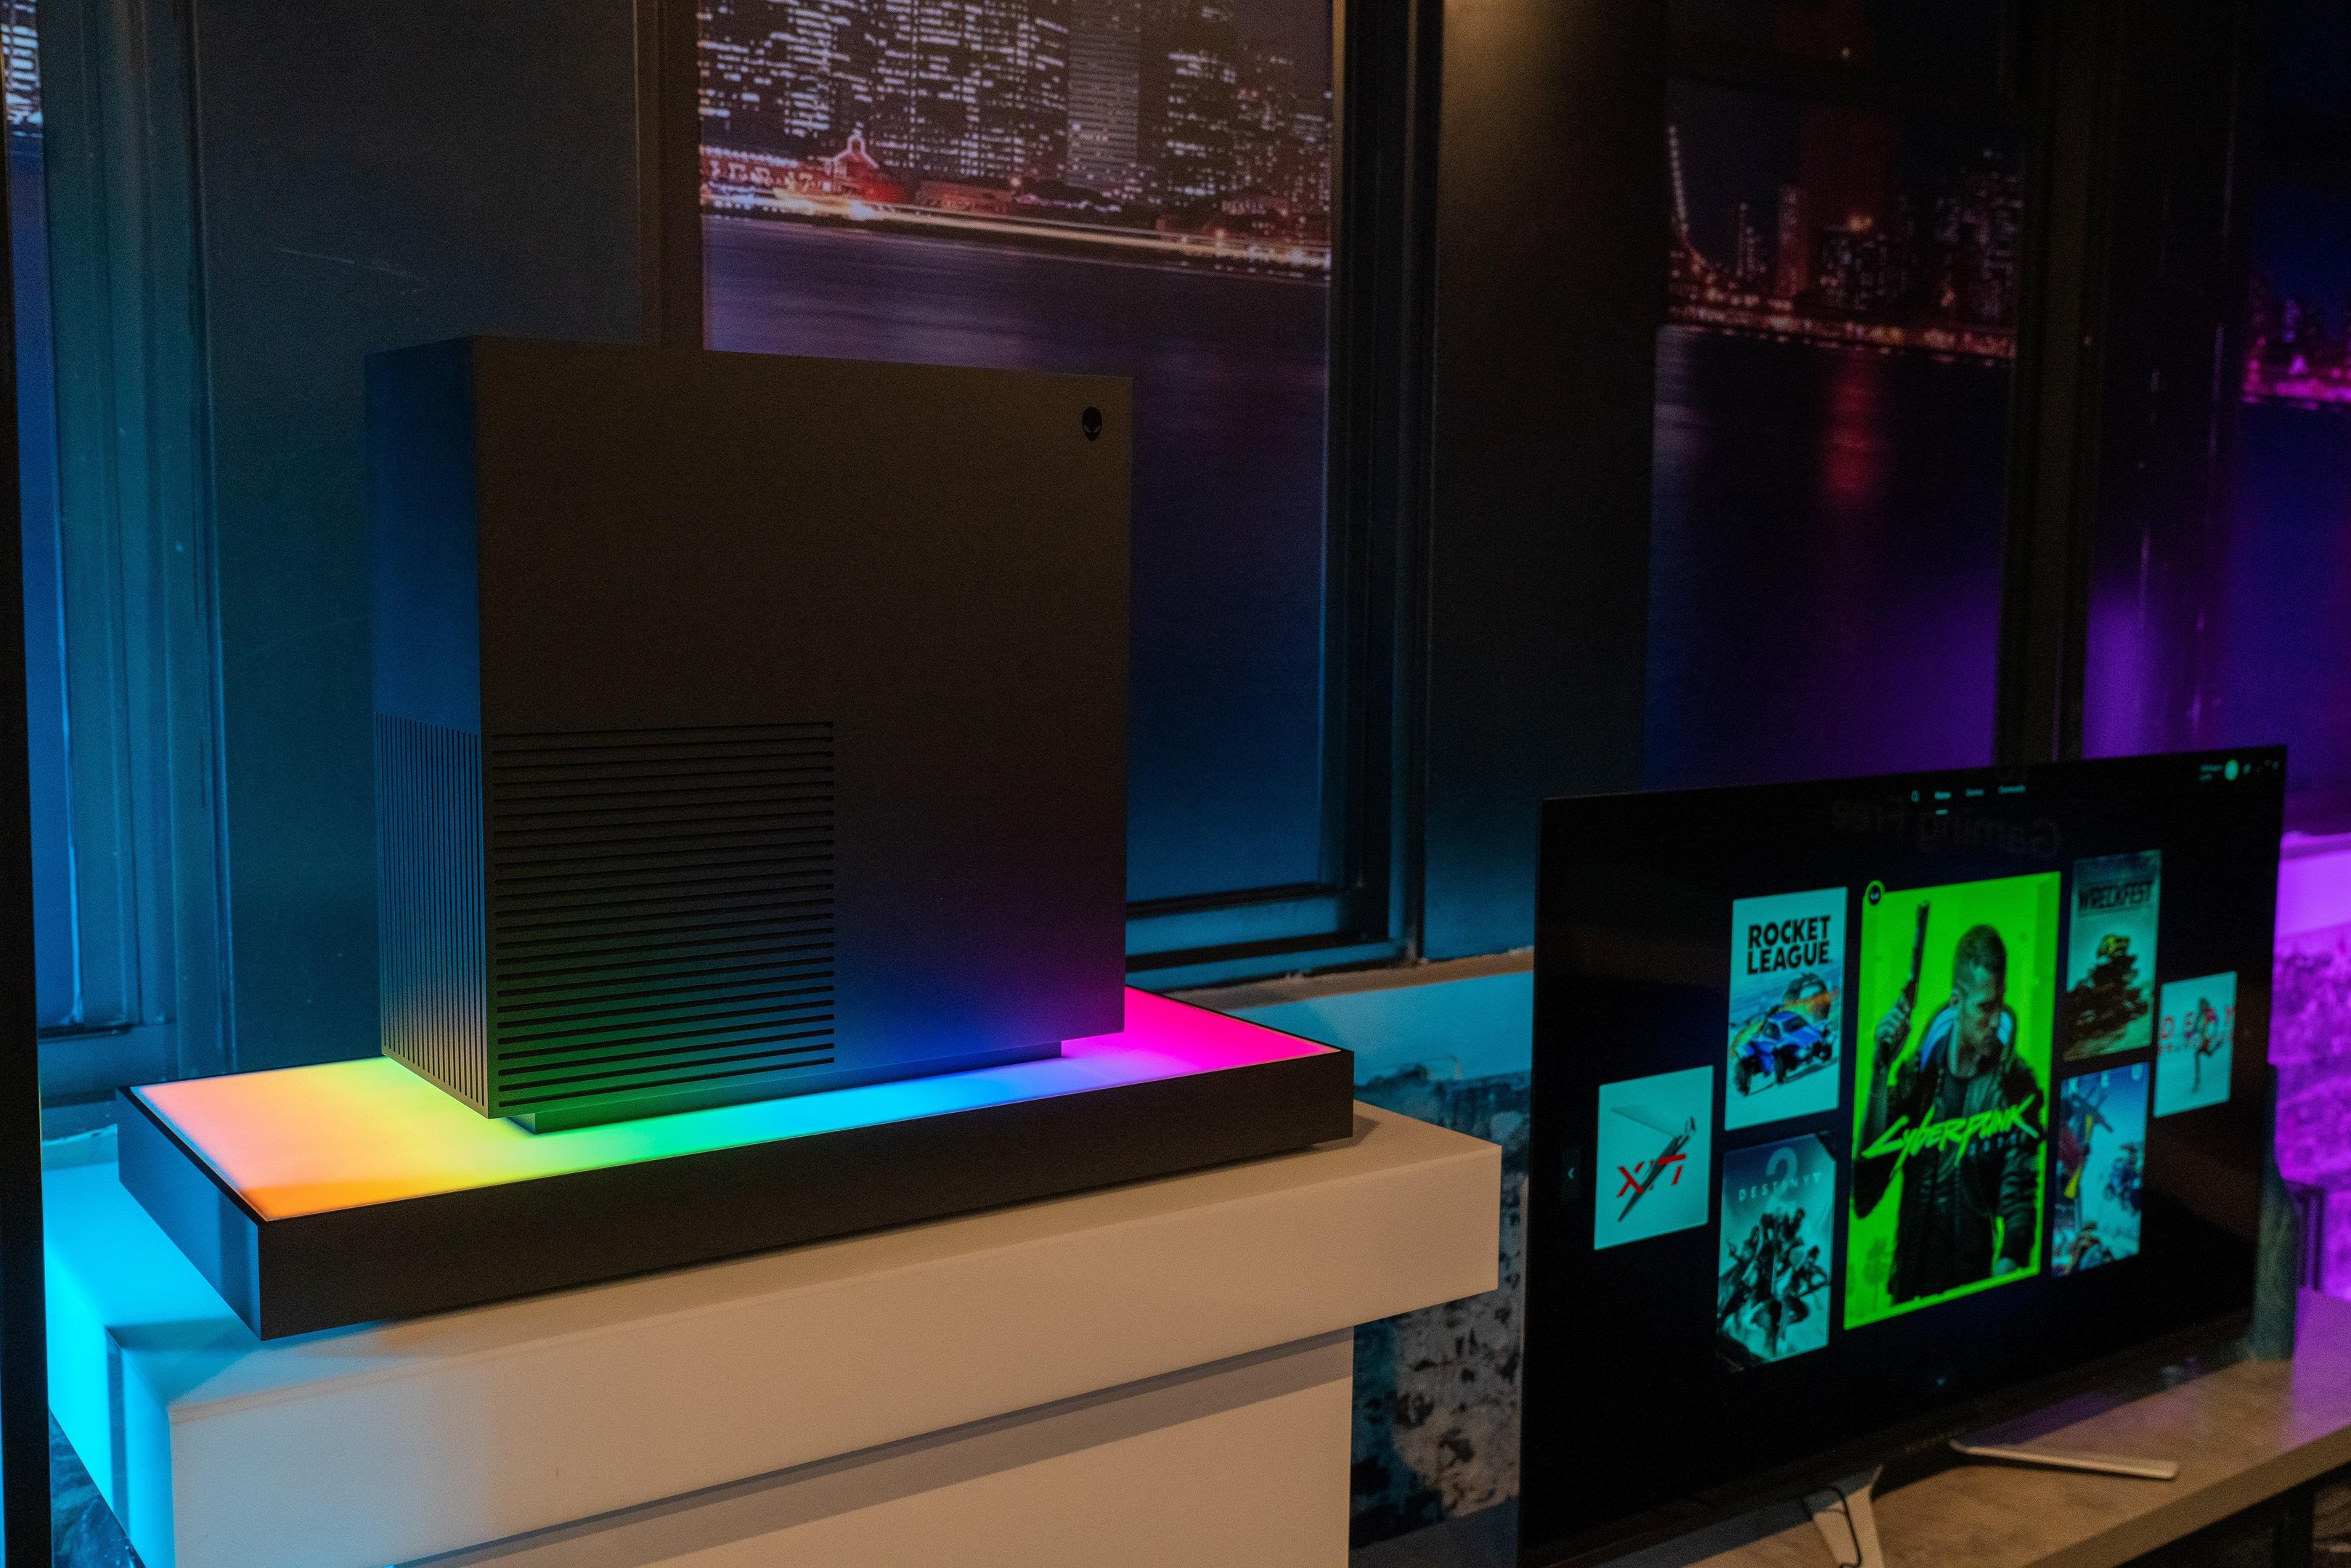 Conheça o Nyx, o novo console conceito que pode revolucionar o streaming